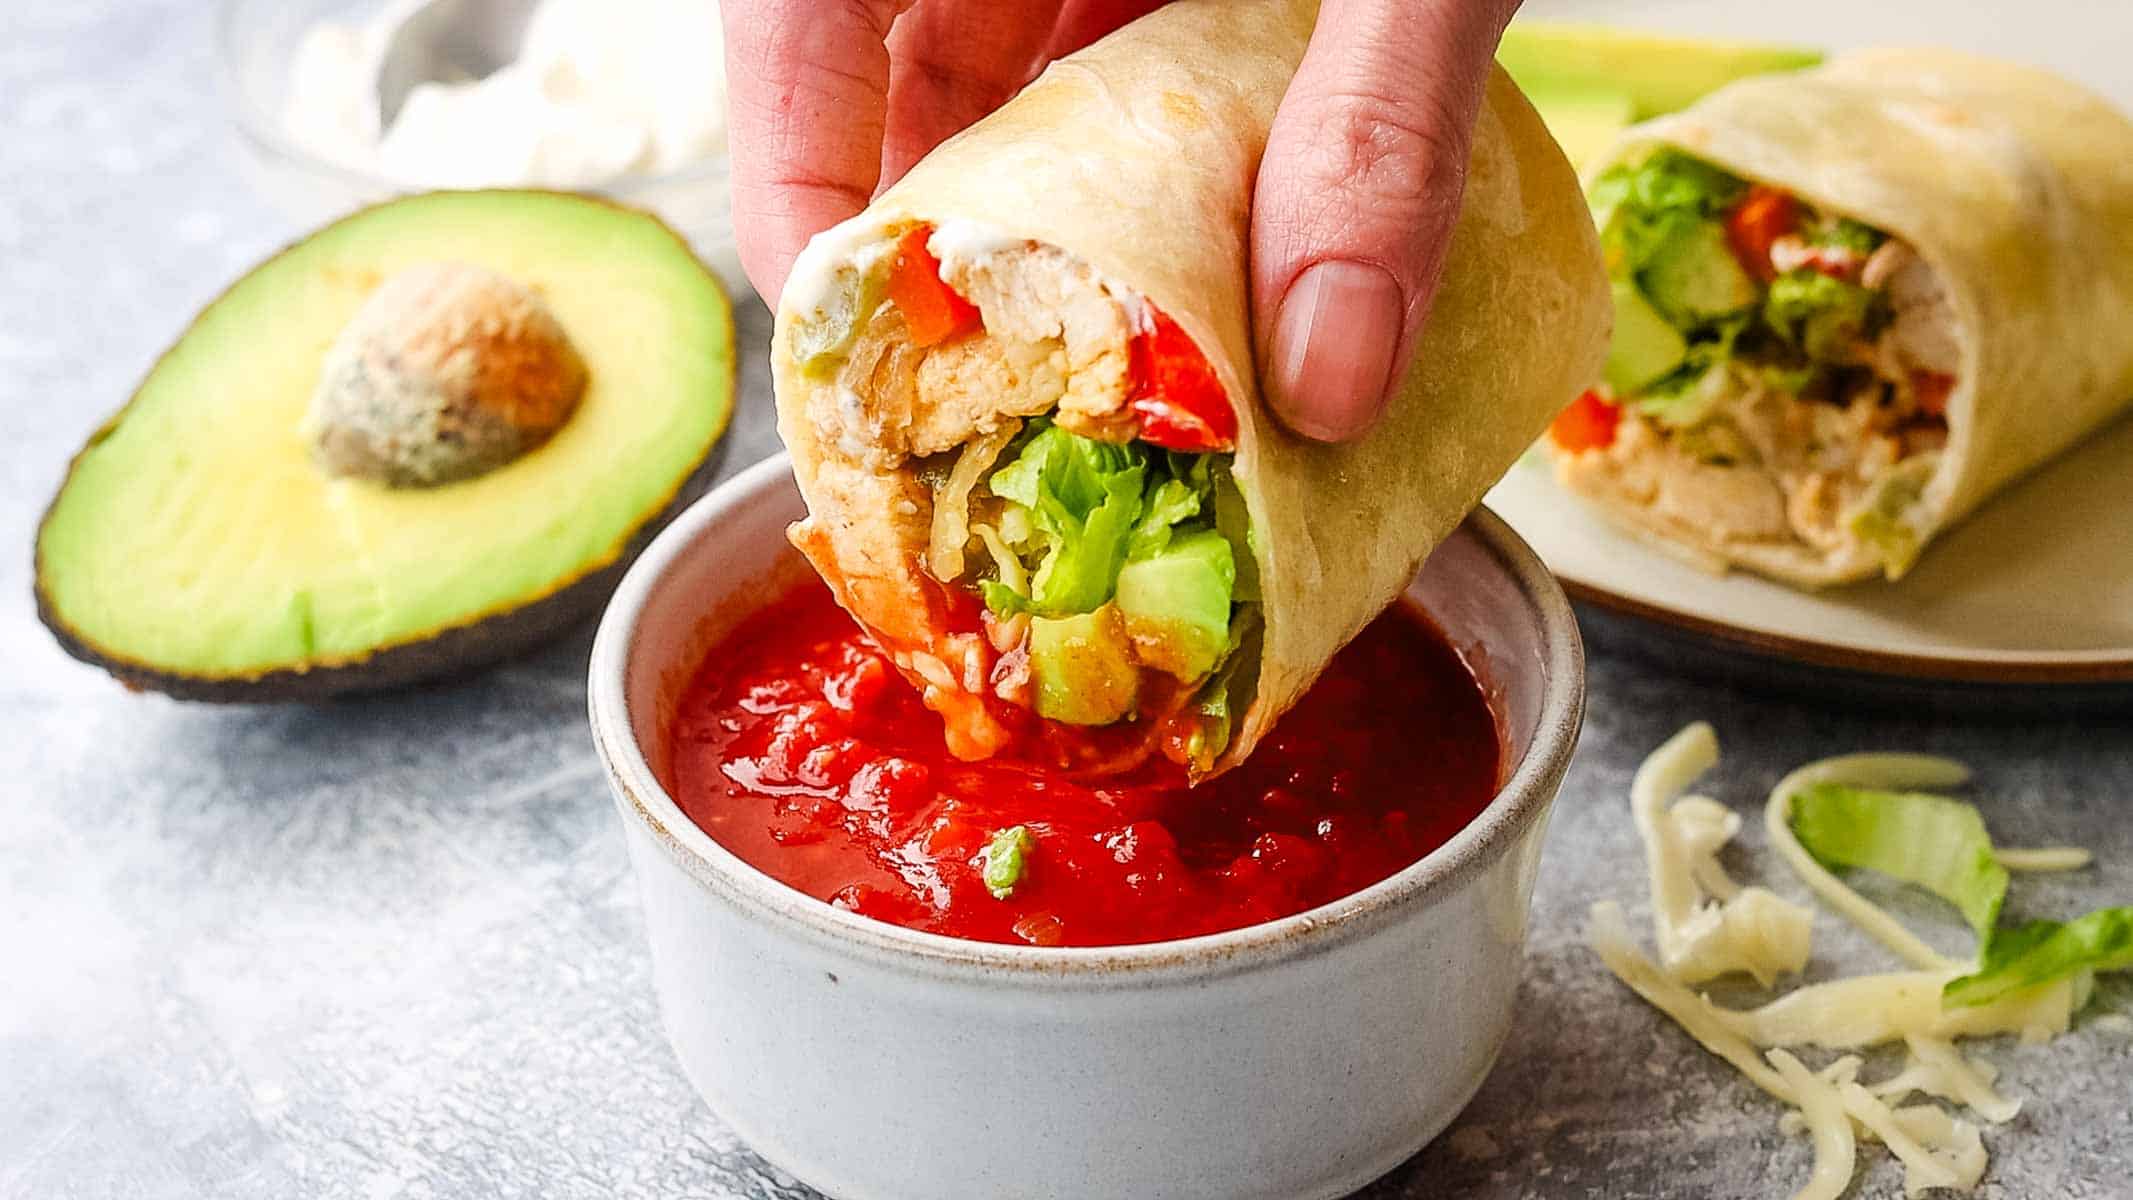 Dipping half-cut chicken fajita wrap in a bowl of salsa.